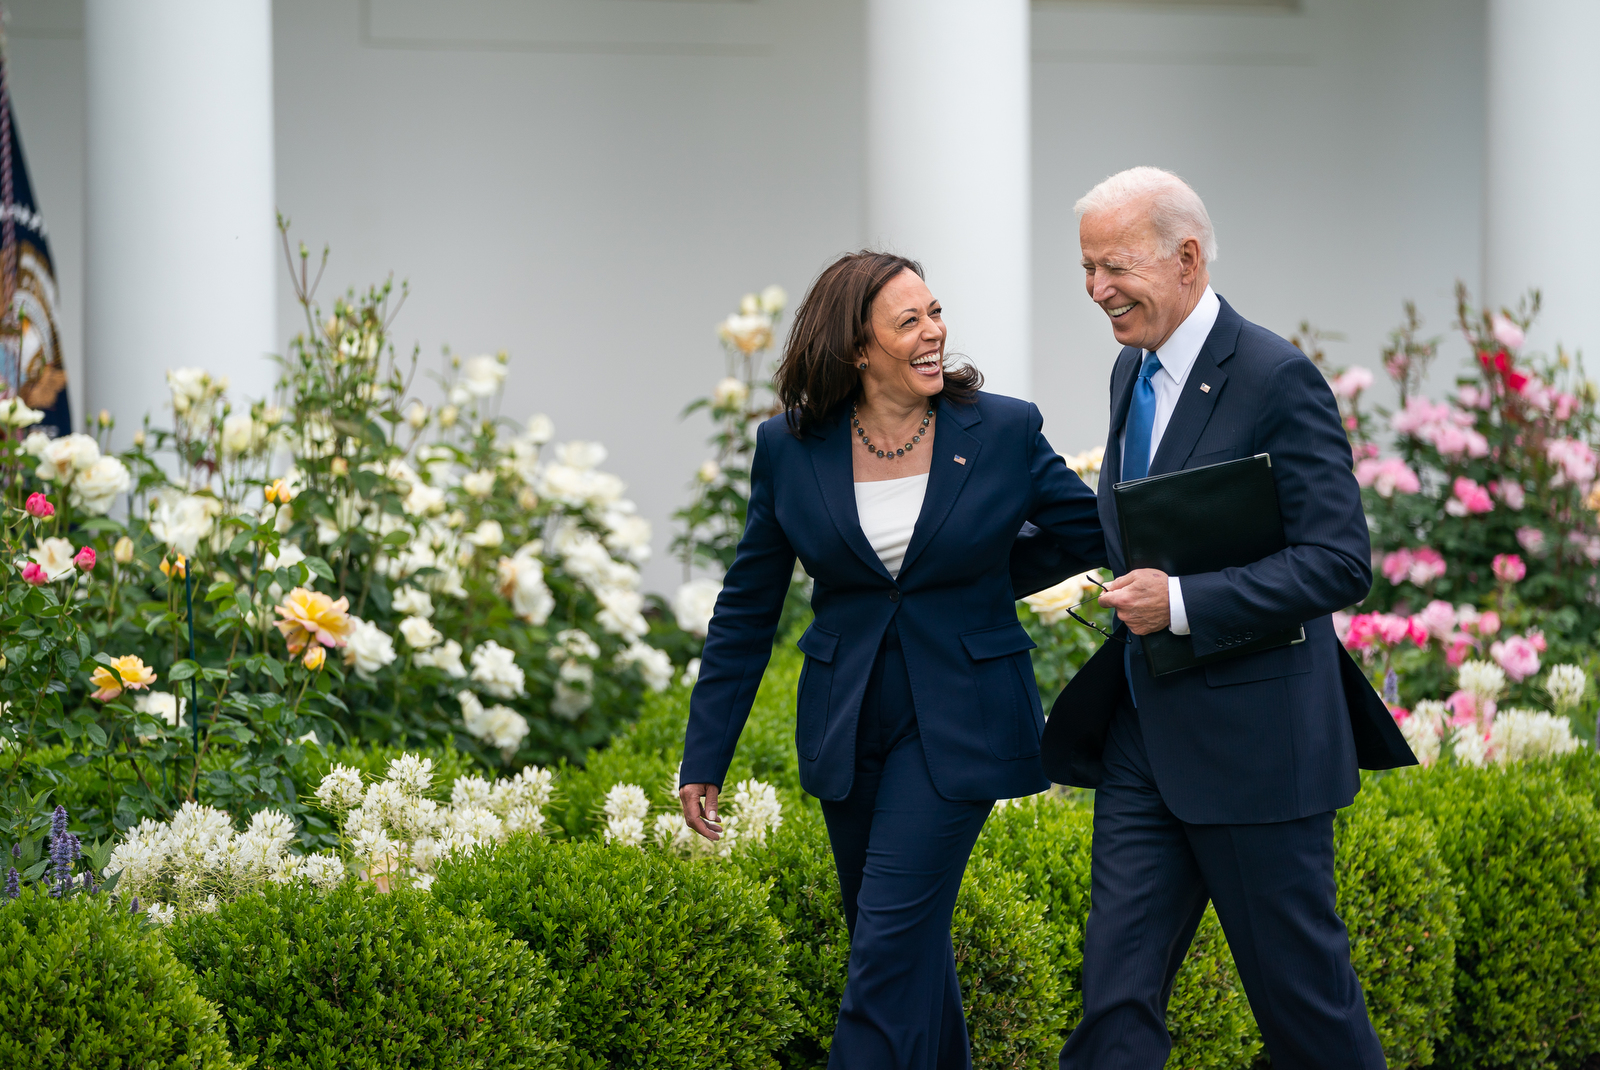 Joe Biden and Kamala Harris walking together in the Rose Garden of the White House